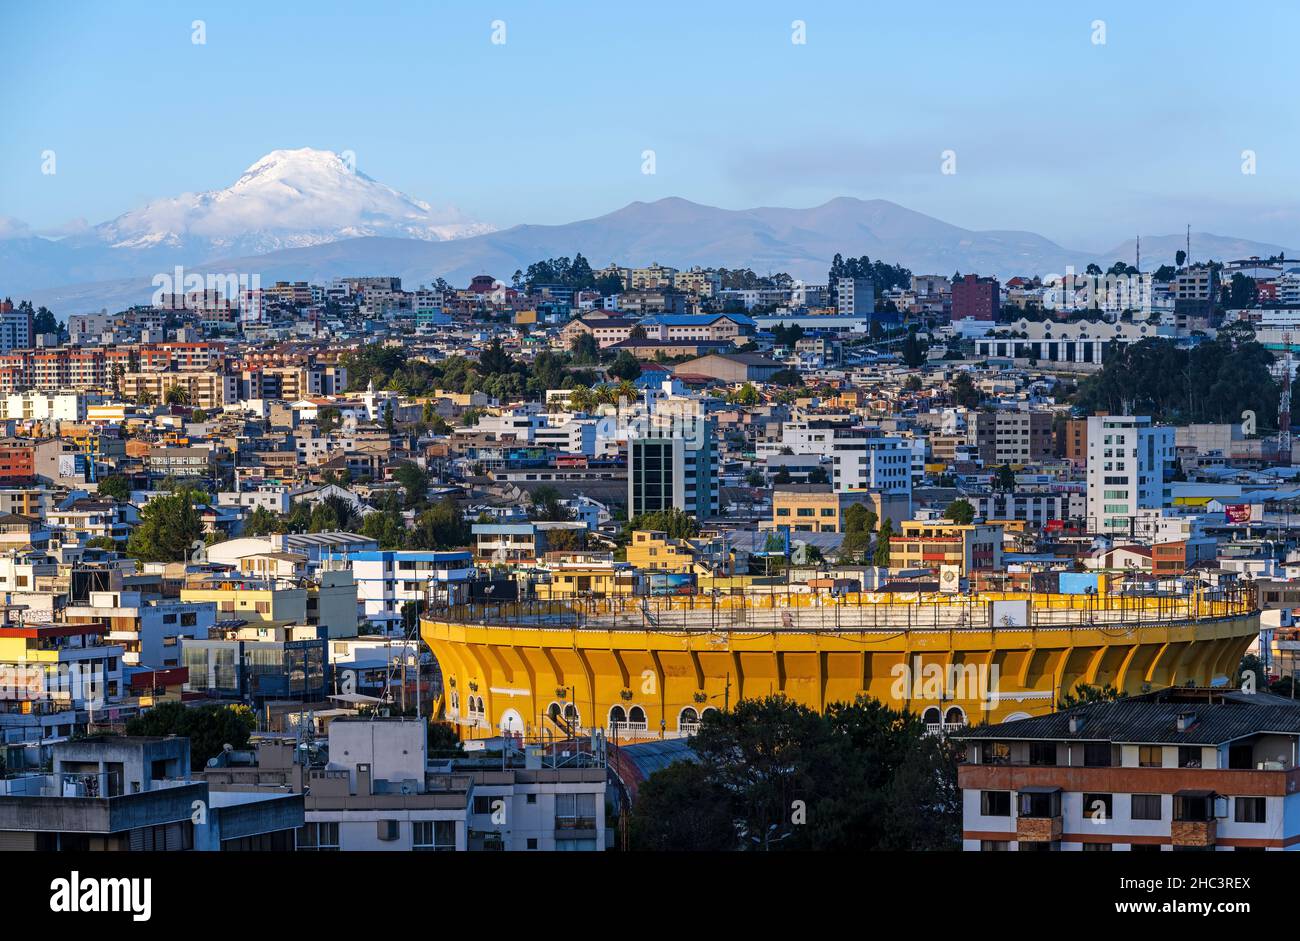 Bullfighting arena and Cayambe volcano with the skyline of Quito, Ecuador. Stock Photo